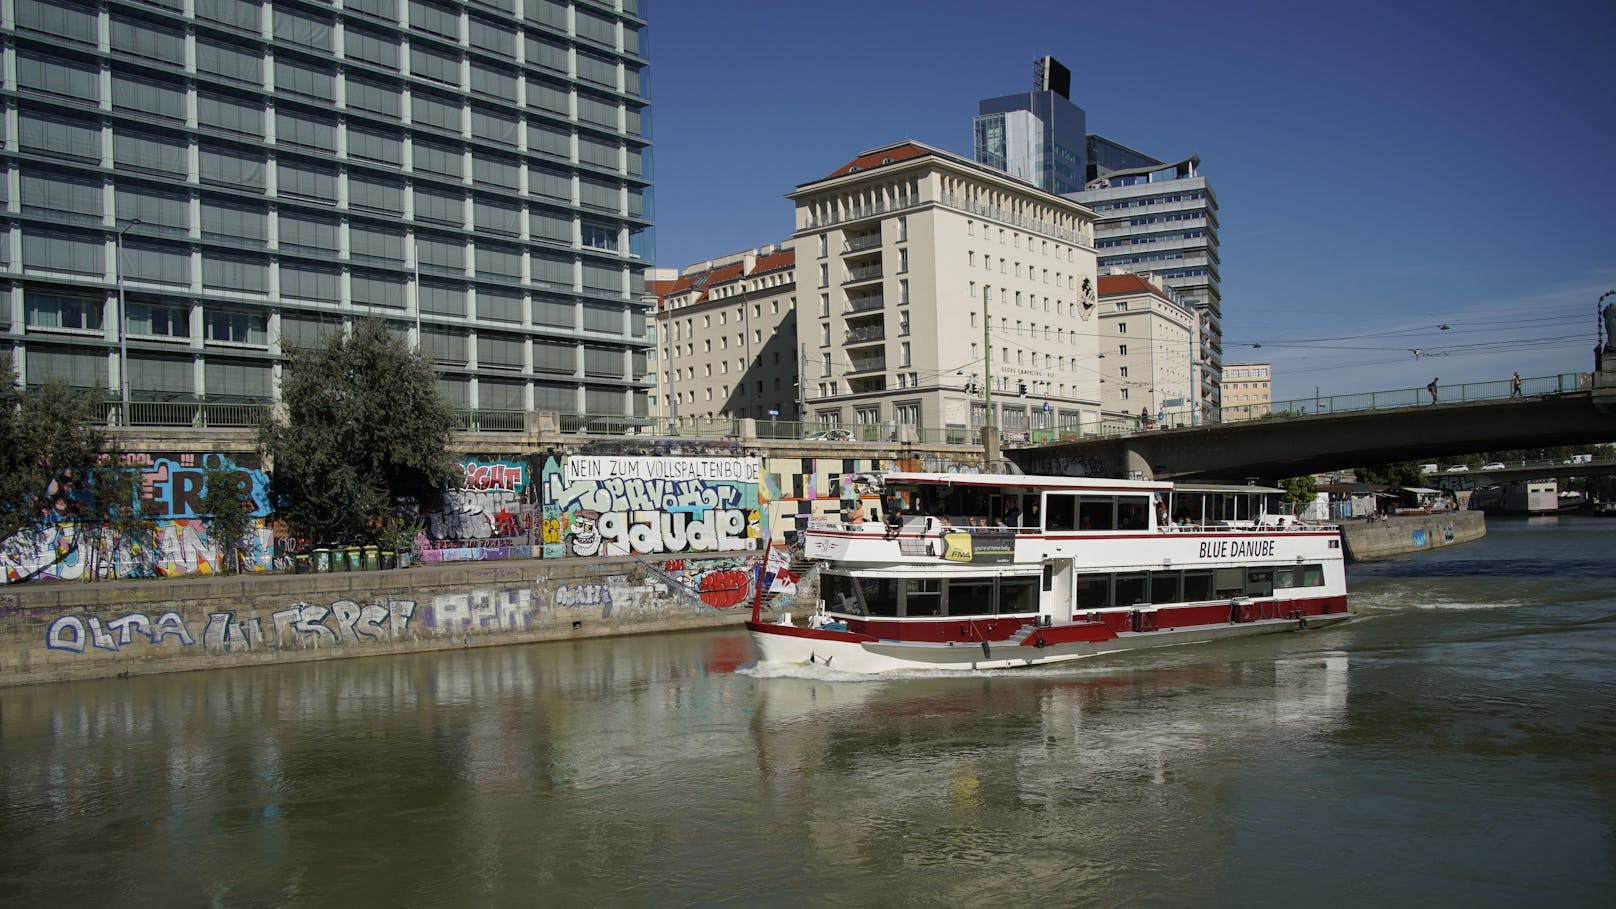 Street Art River Cruise ab Sonntag in Wien